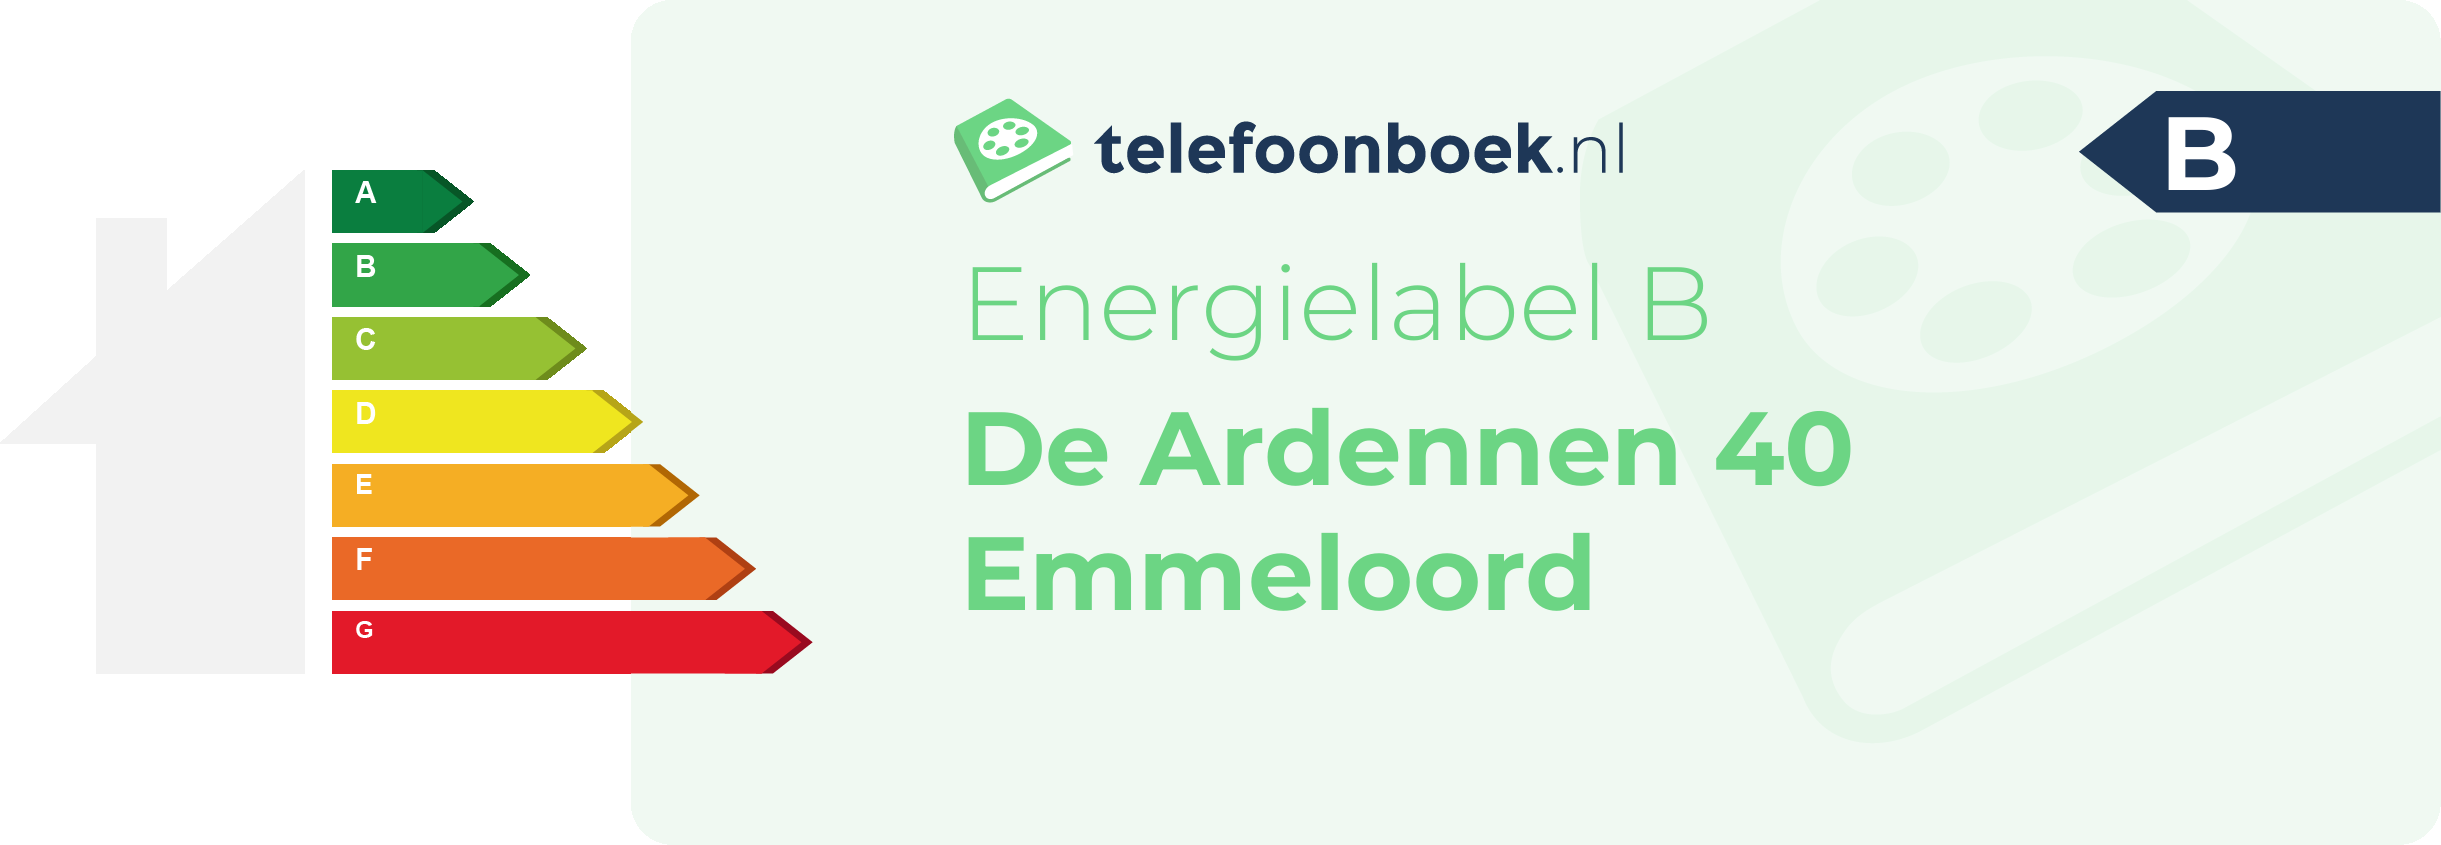 Energielabel De Ardennen 40 Emmeloord